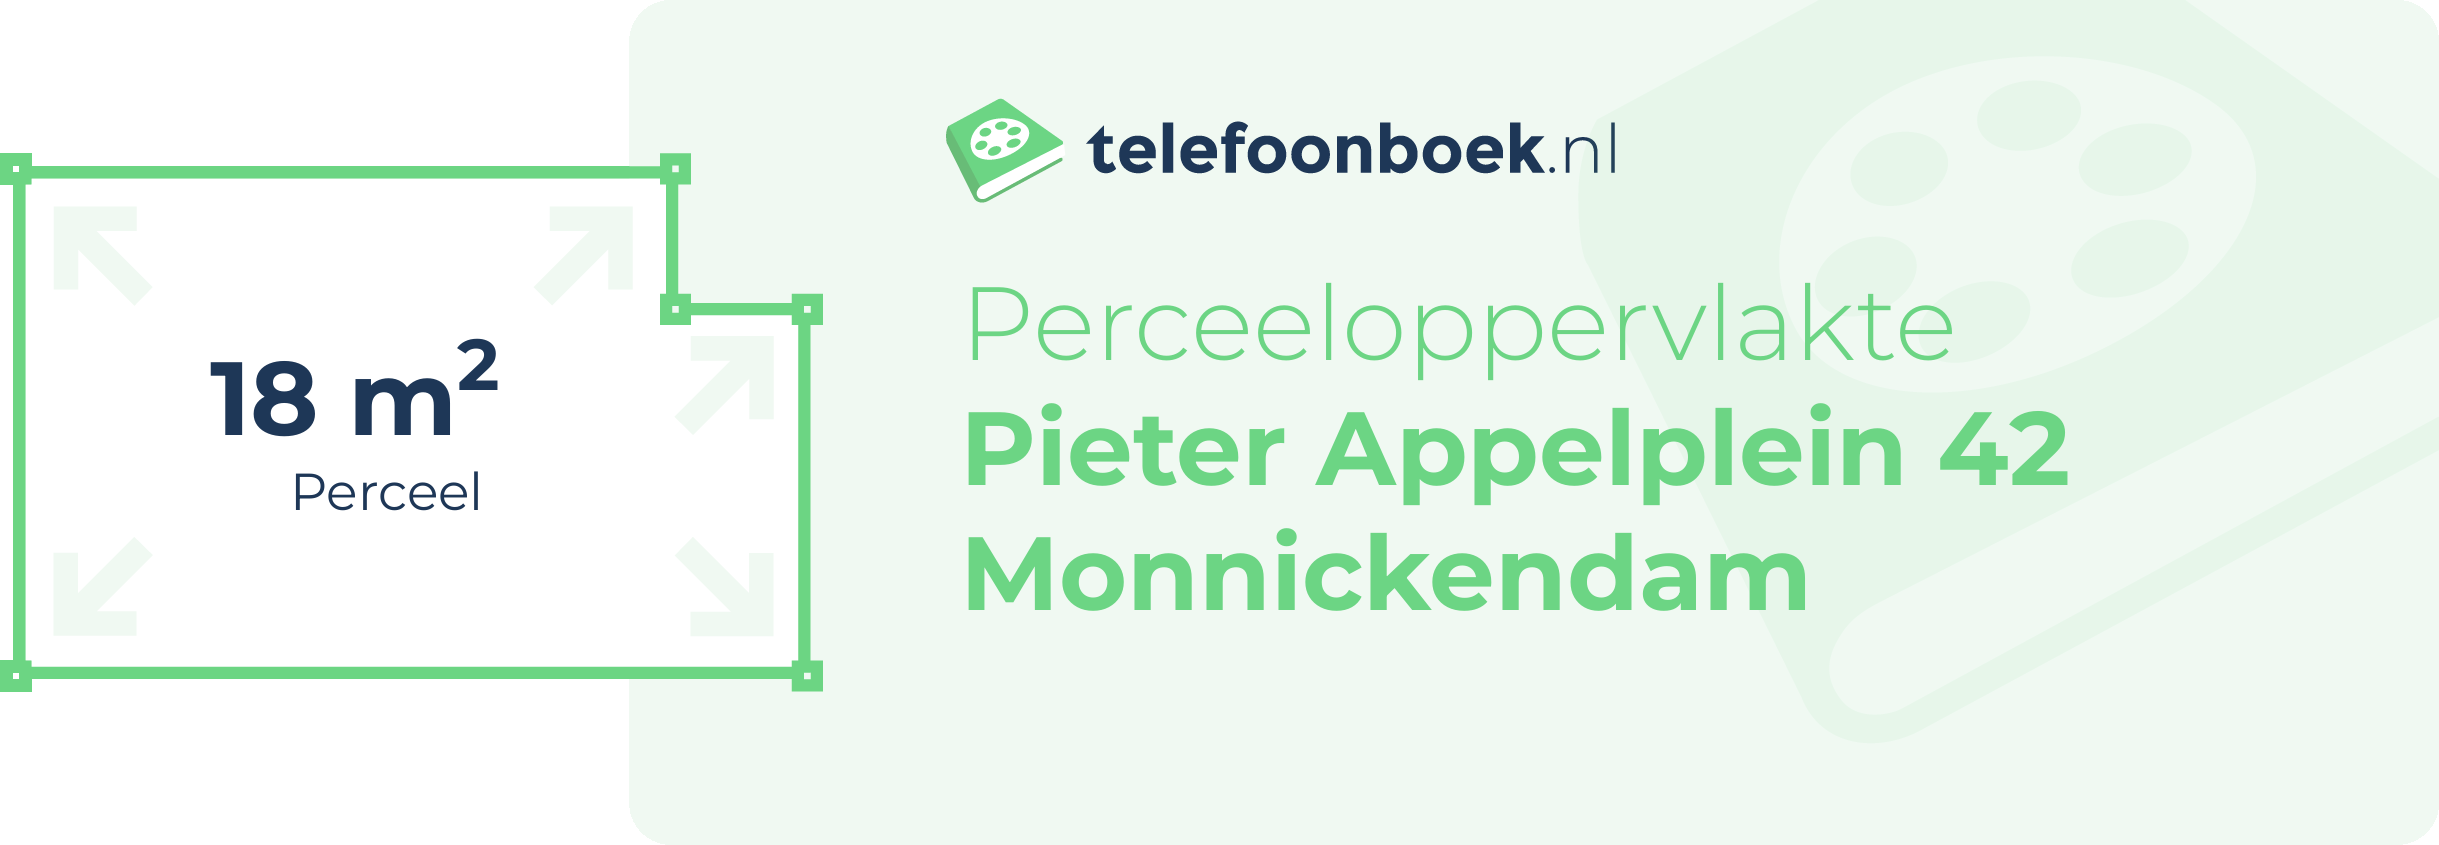 Perceeloppervlakte Pieter Appelplein 42 Monnickendam